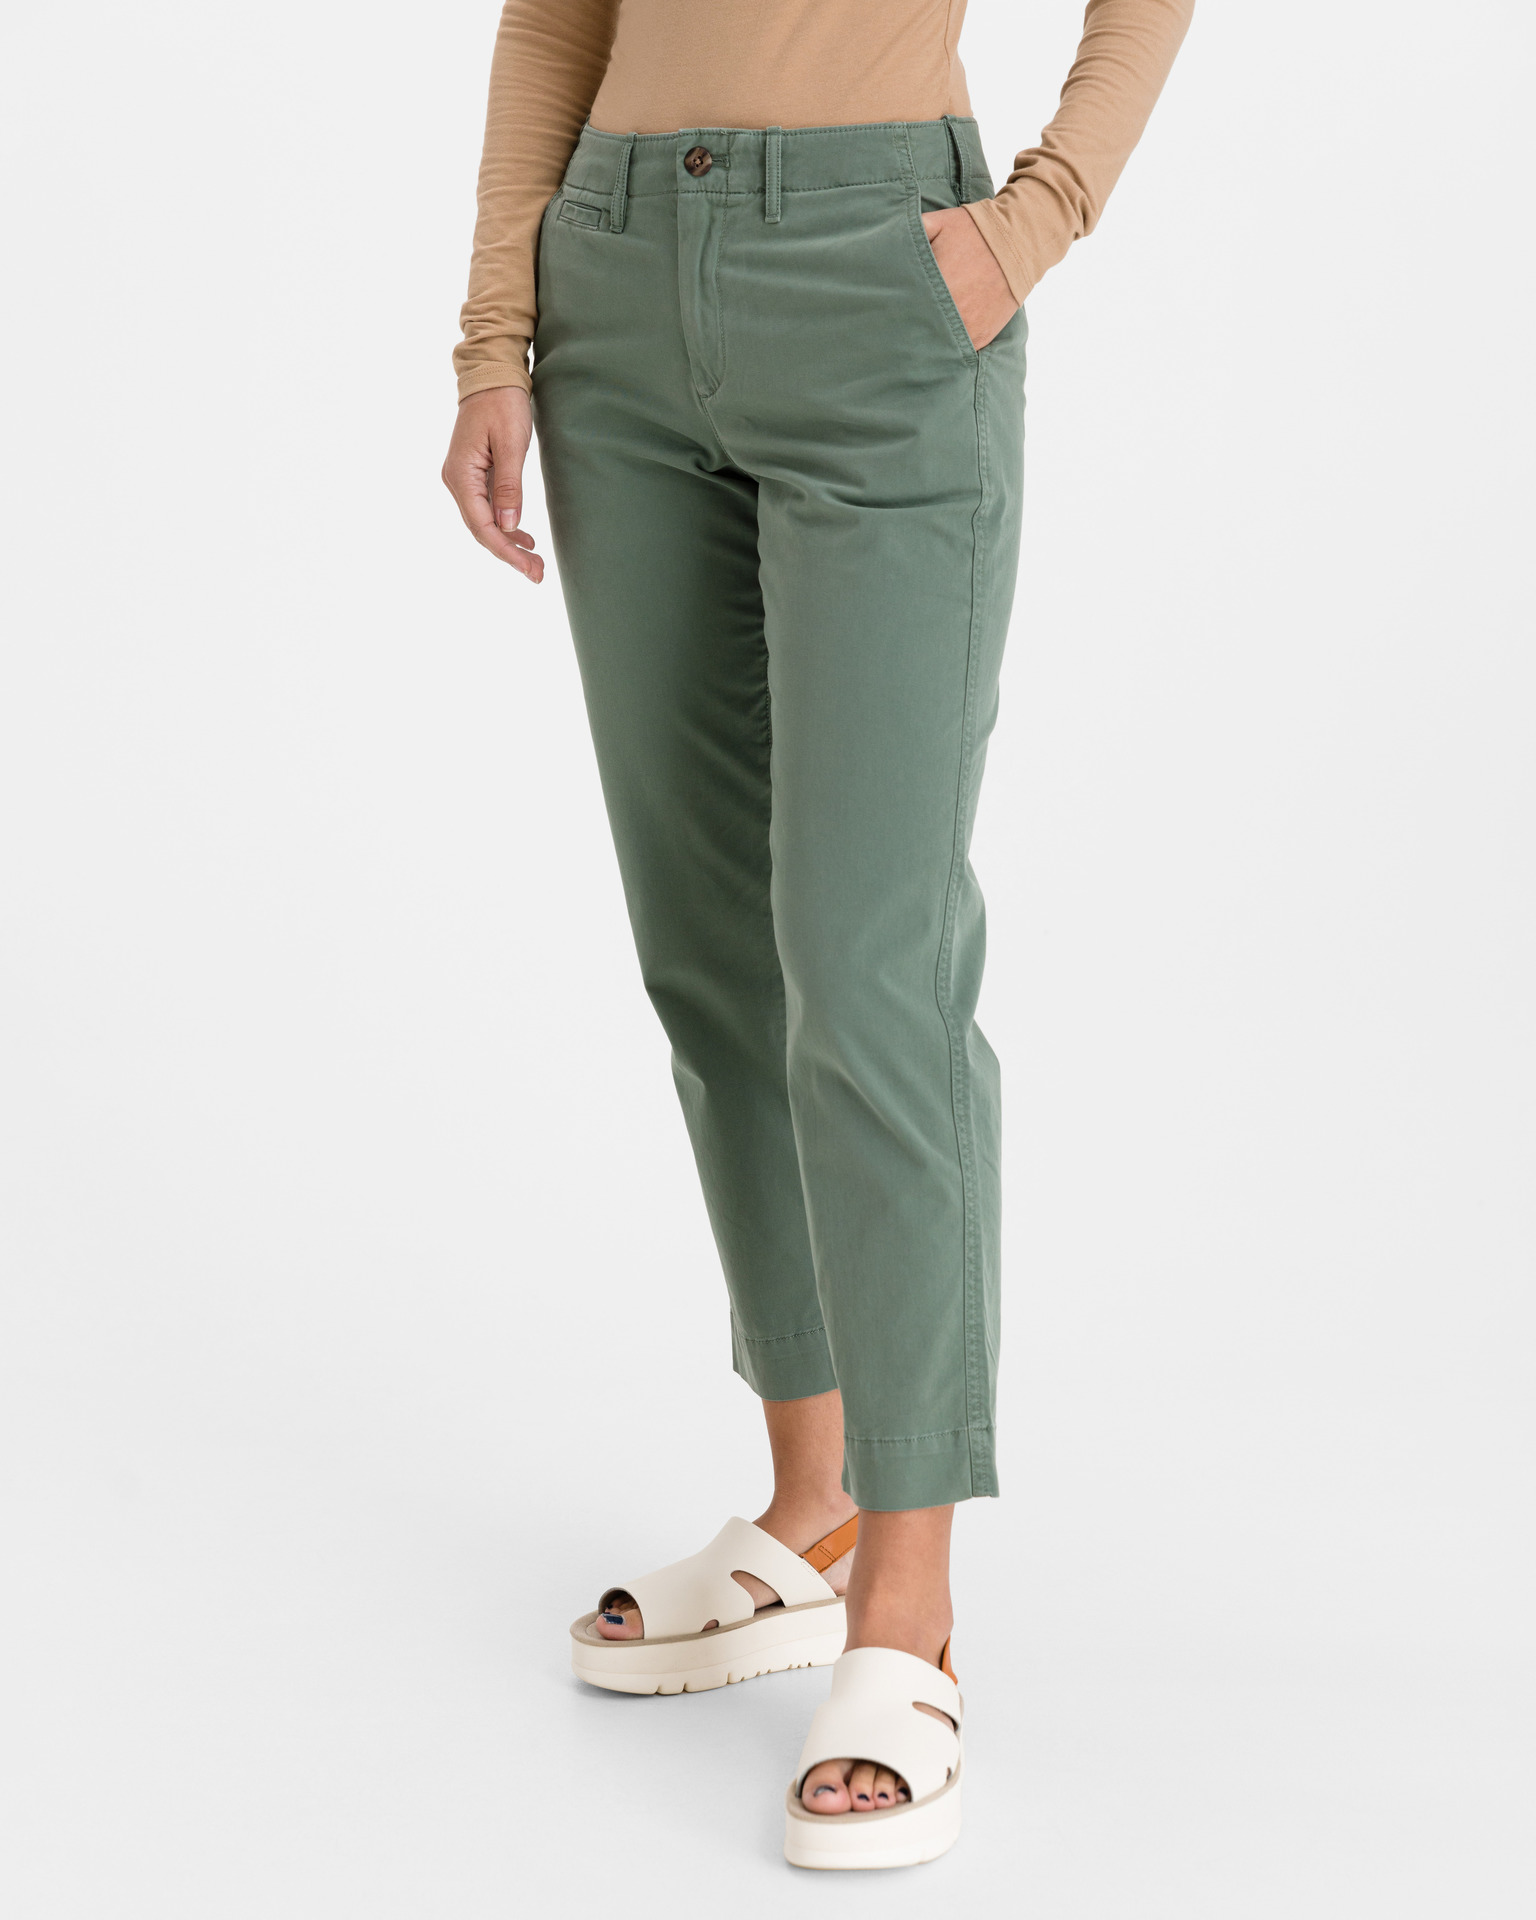 GAP | Pants & Jumpsuits | Nwot Gap Linen Cream Color Stretch Perfect  Trousers Size 2a | Poshmark